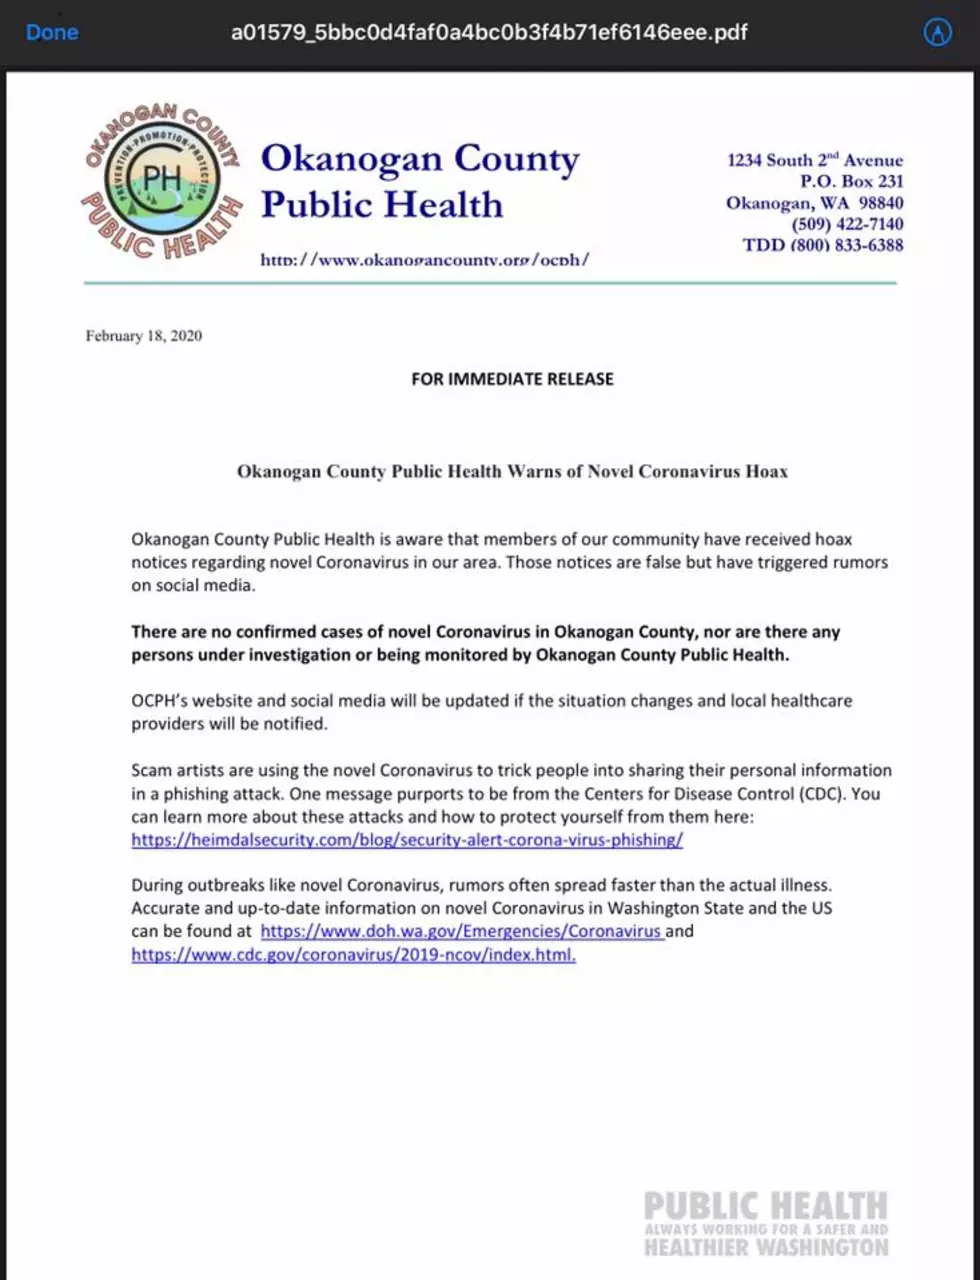 Okanogan County Public Health Warns of Coronavirus Scam